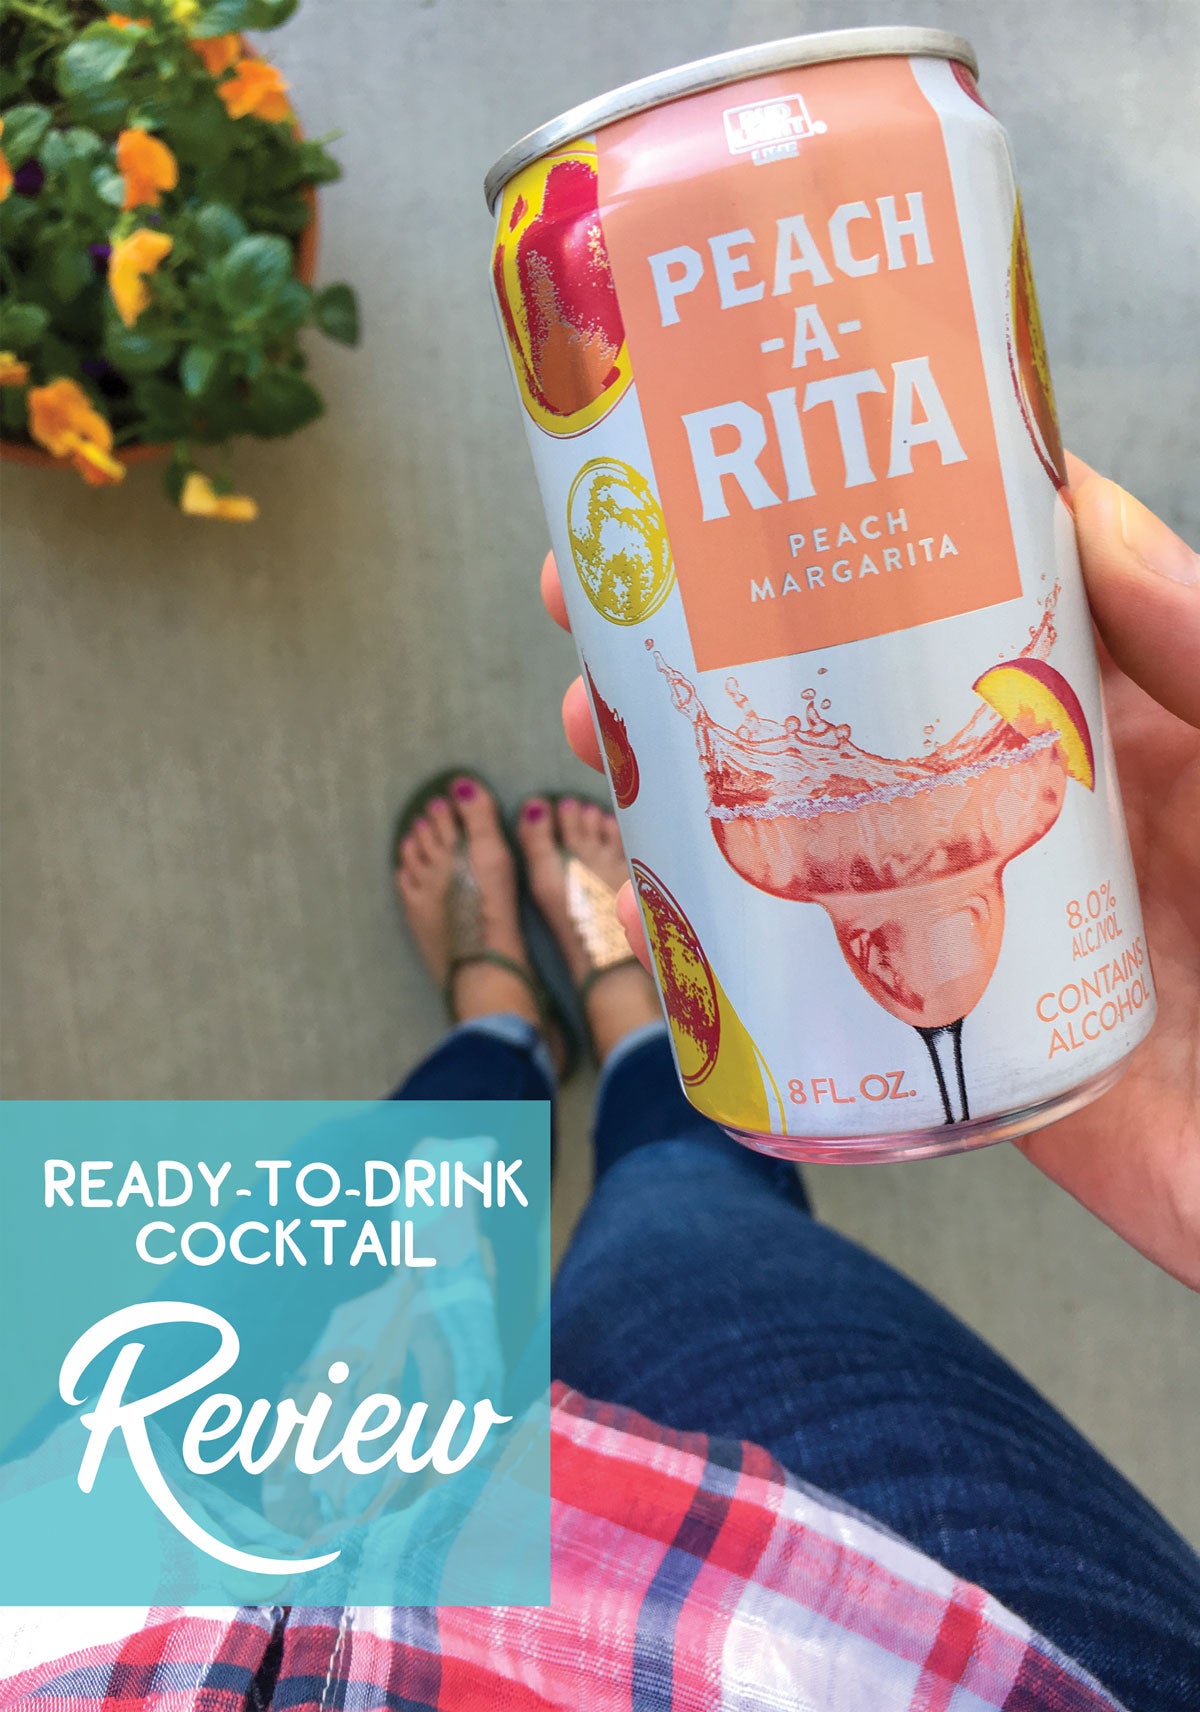 Ready-to-drink cocktail review Peach-a-rita margarita